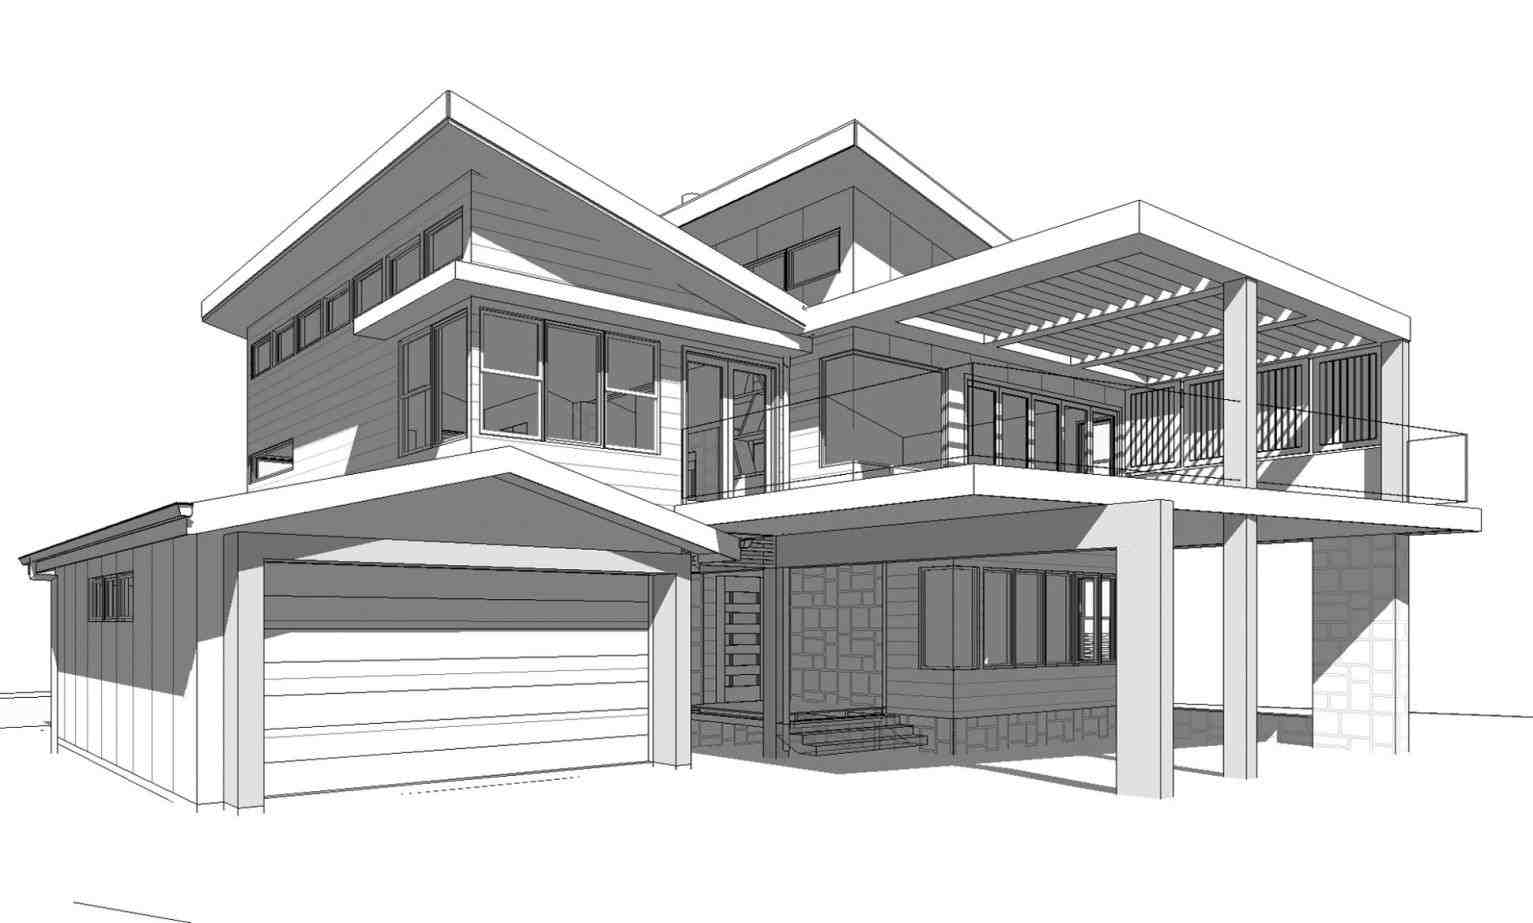 Skizze Bild: Sketch Drawing Of A Modern House